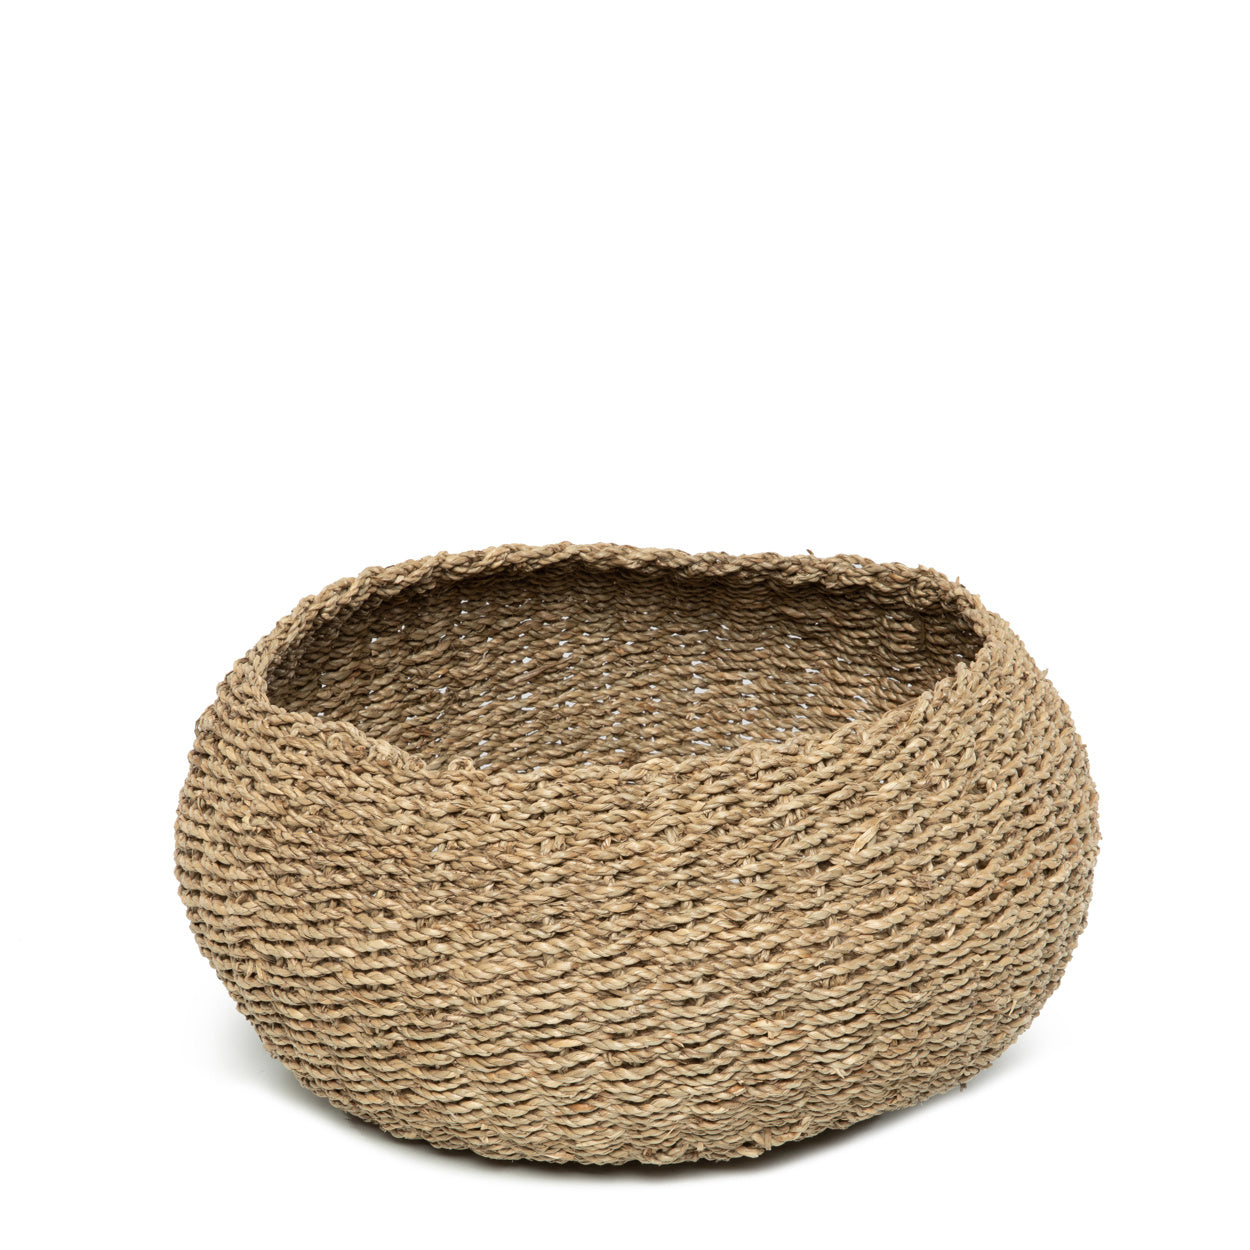 THE HO COC Baskets Set of 3 single medium size basket front view